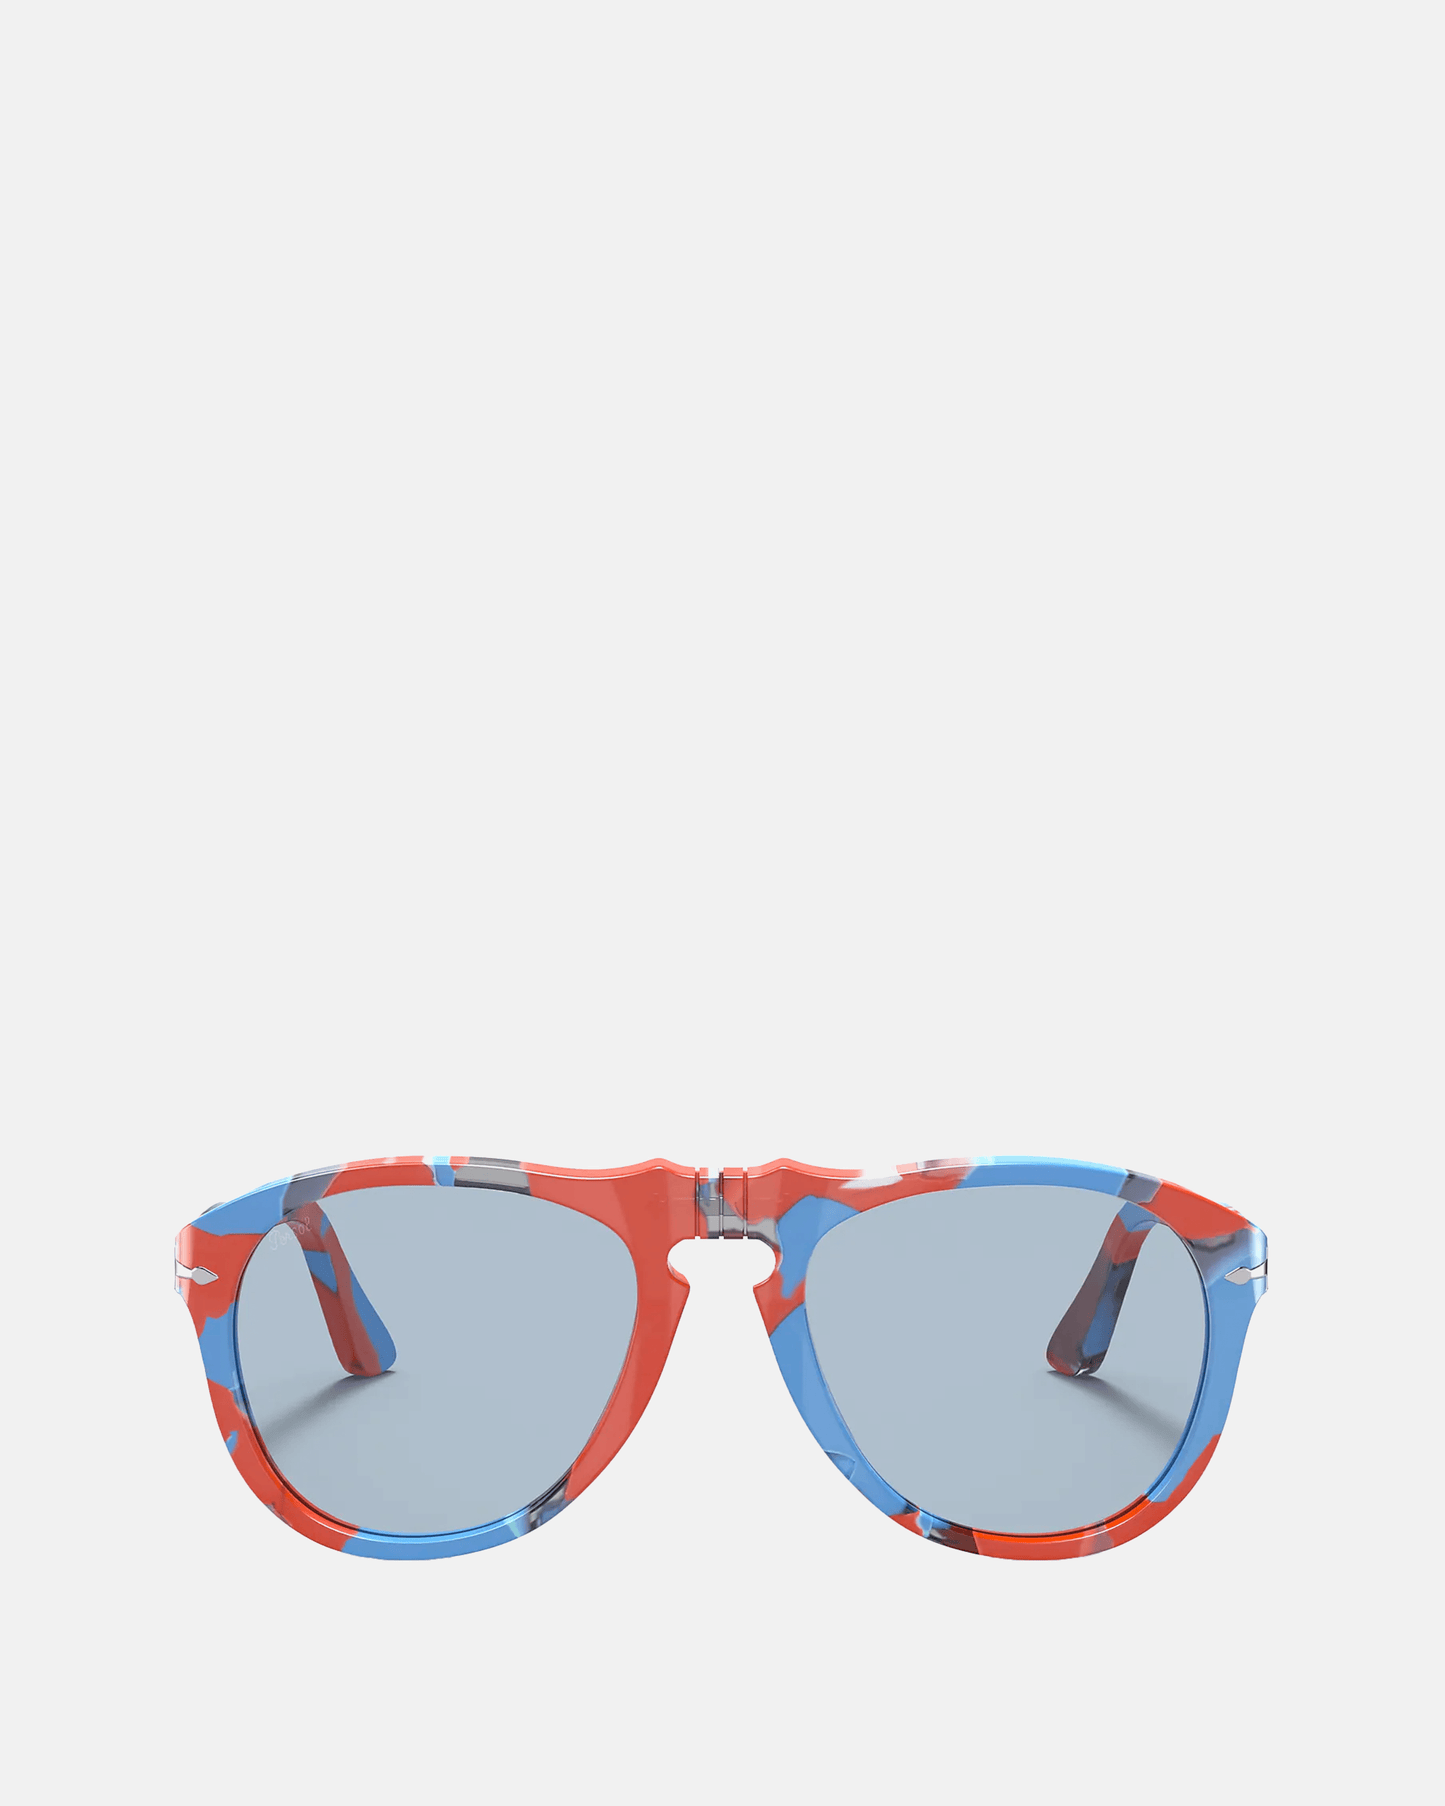 JW Anderson Eyewear Persol 649 in Red/Blue